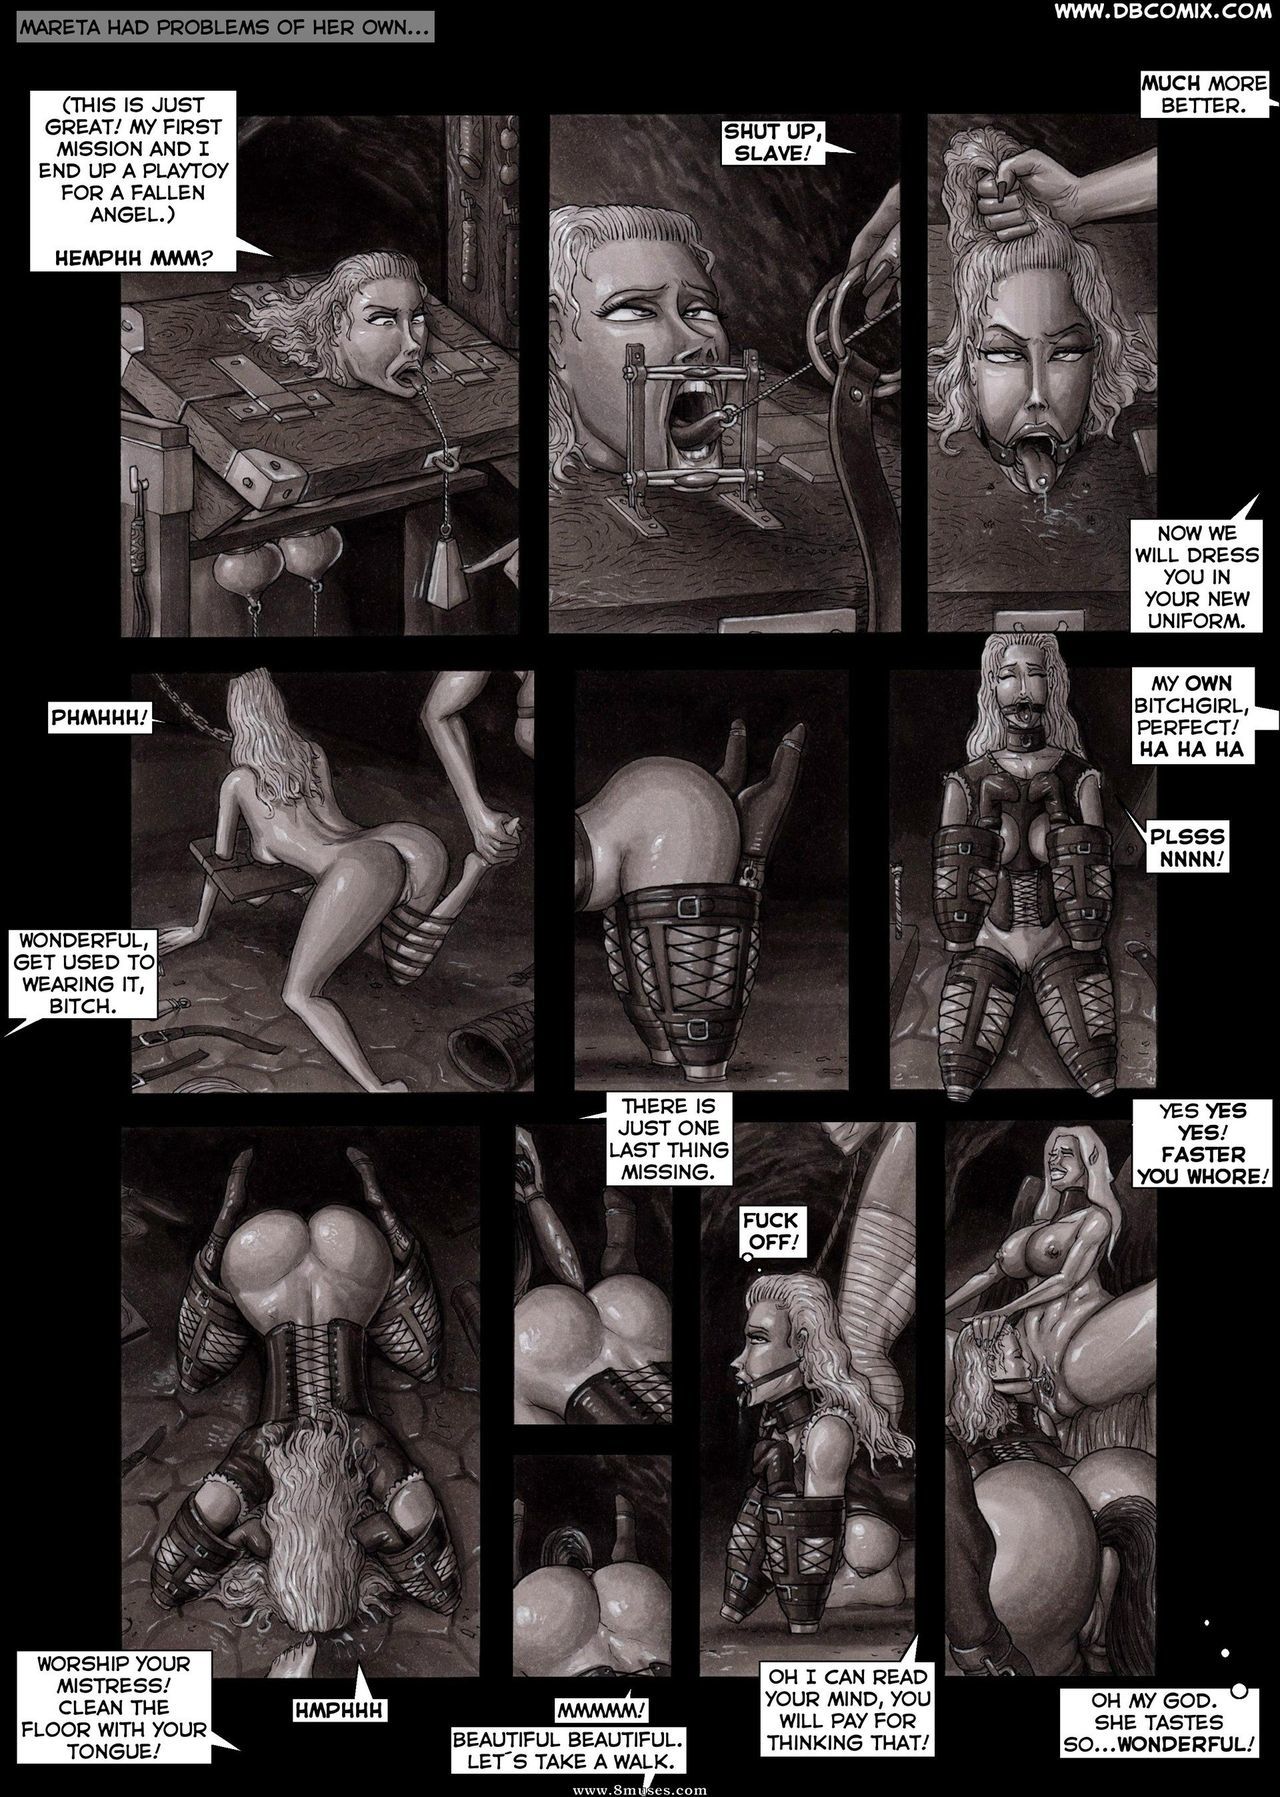 The Vampire Huntress Volume 5 - dbcomix page 8